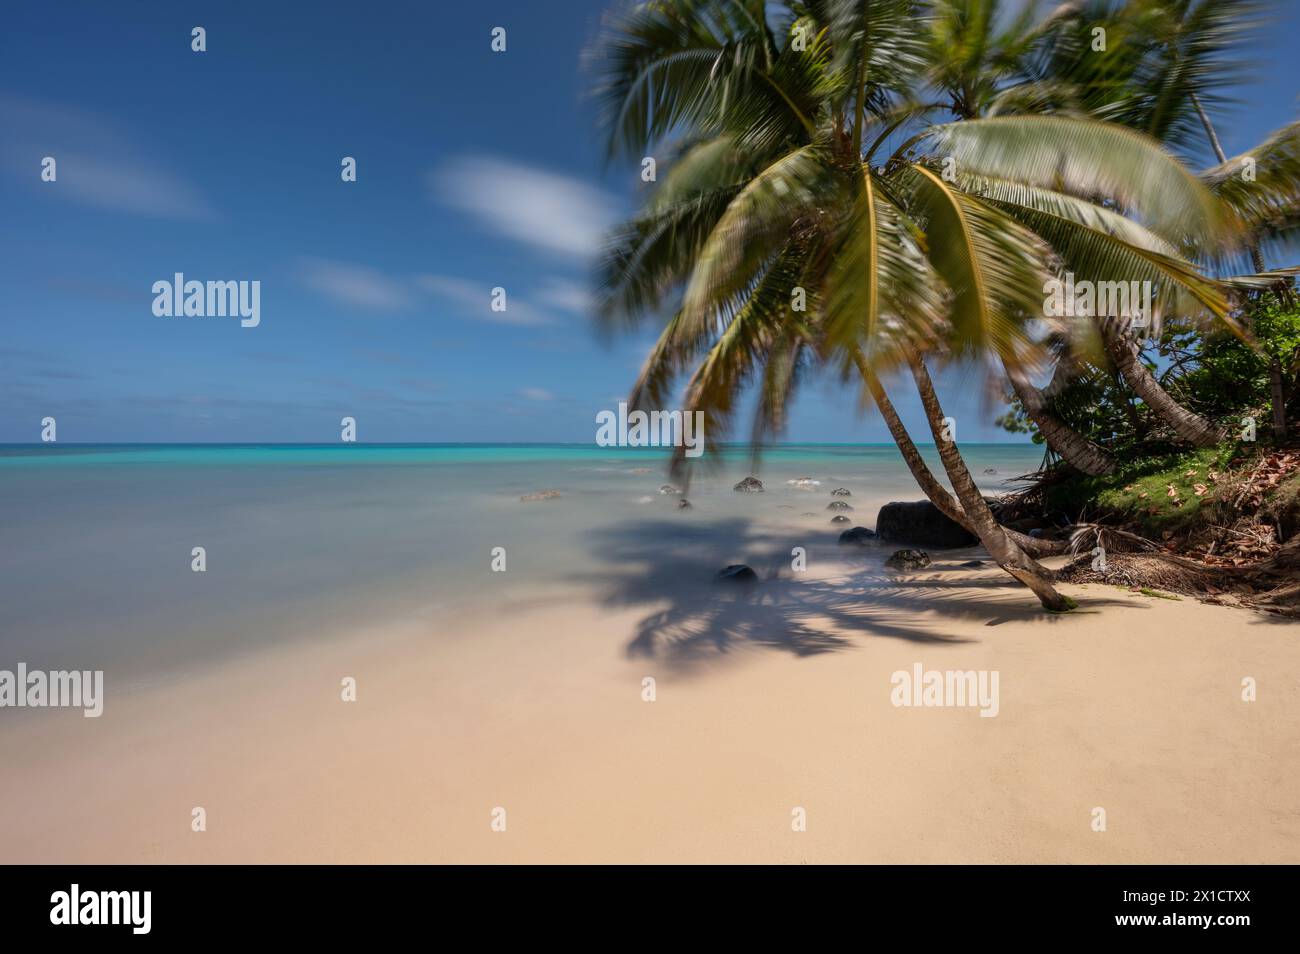 Clean sand beach at blue sea under palm tree shade Stock Photo